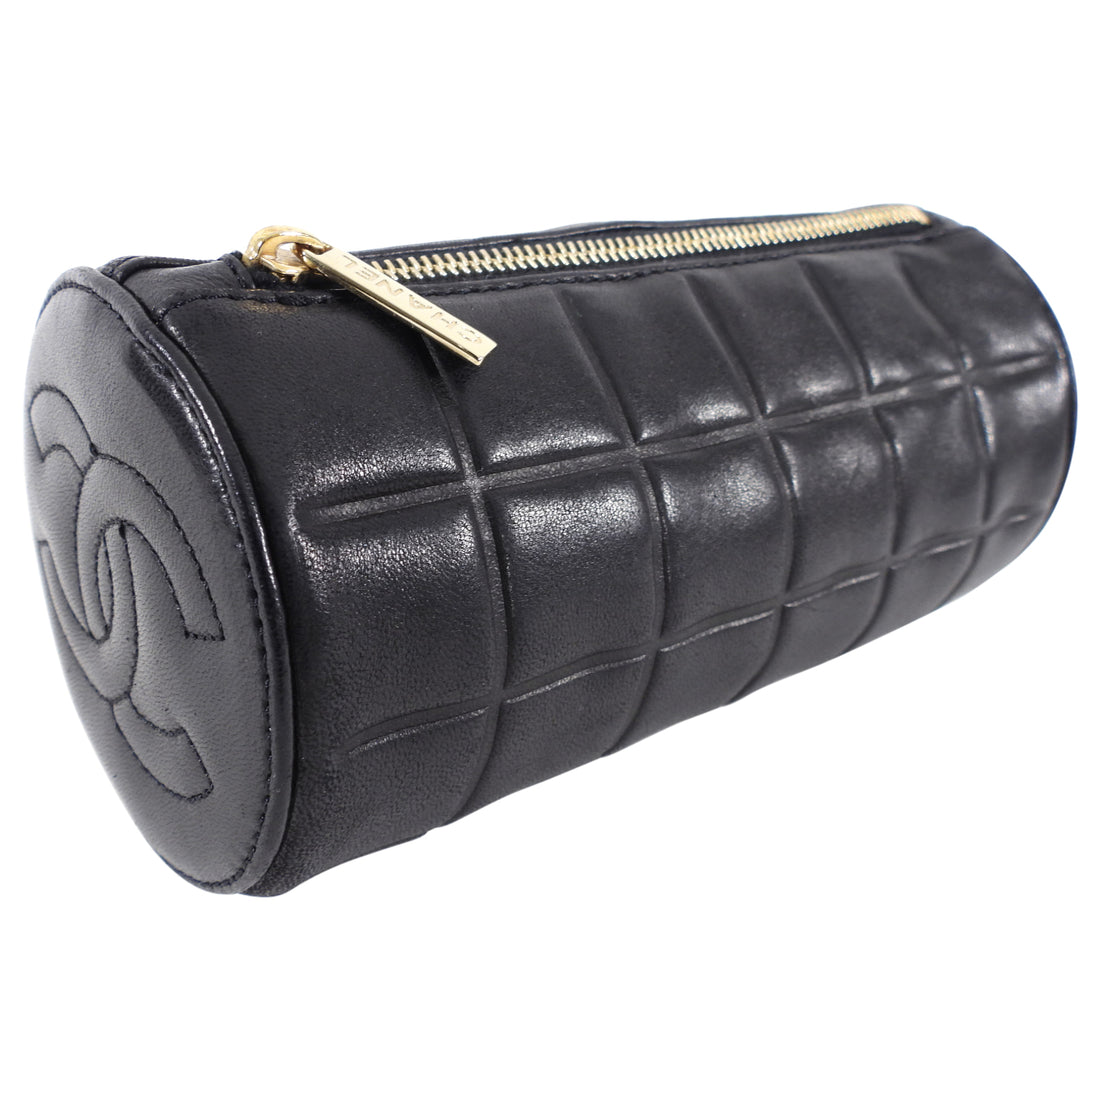 Chanel Vintage 2002 Black Lambskin Leather Choco Bar Cosmetic Roll Case